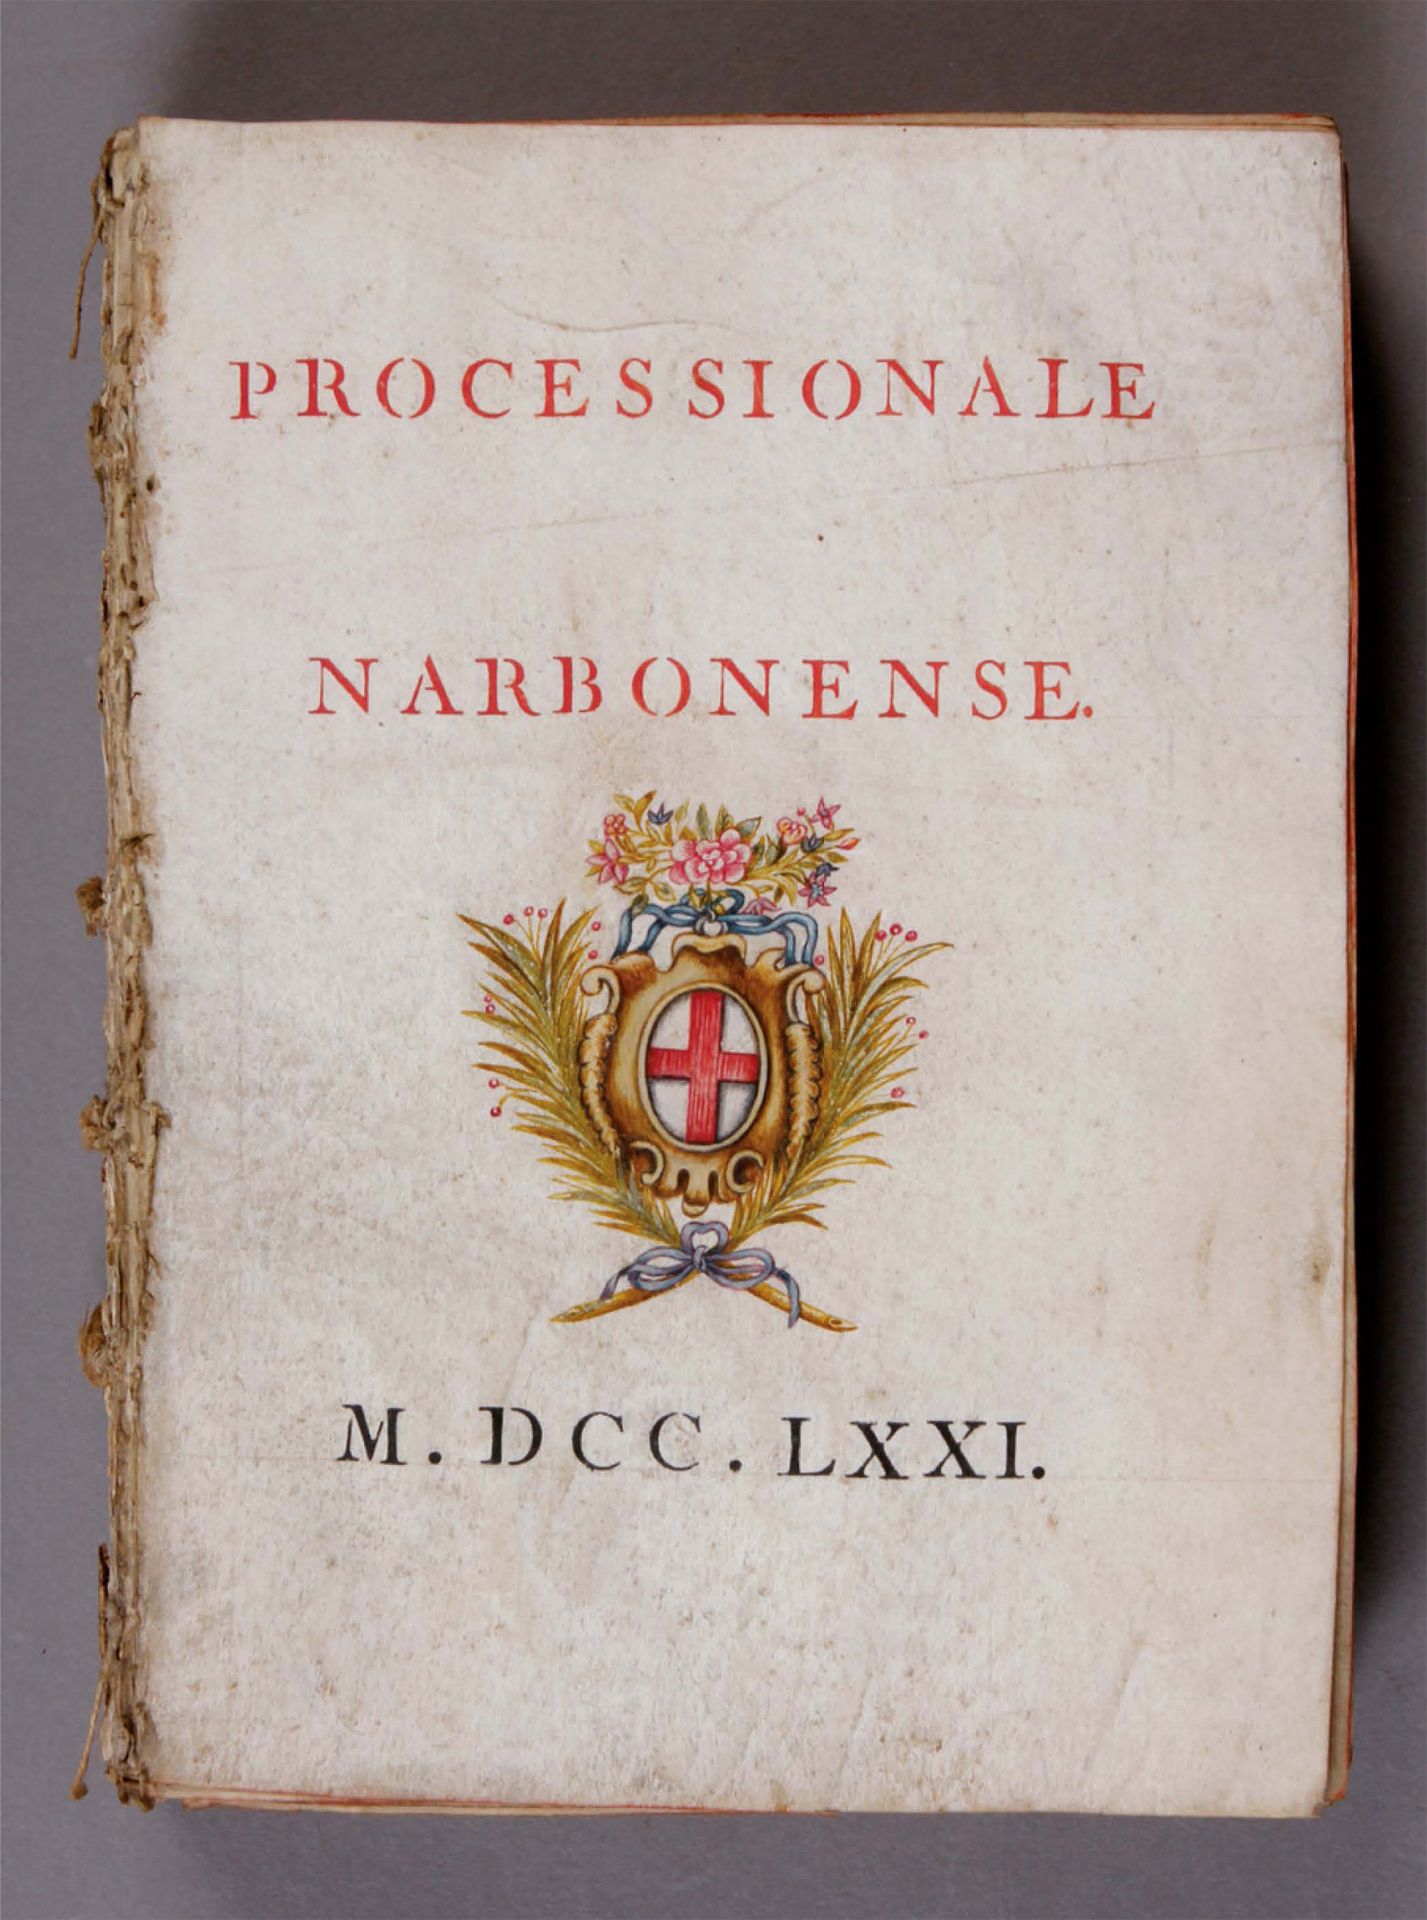 Null [Antiphonar auf Velin 18. Jahrhundert]. 
PROCESSIONNALE NARBONENSE 1771. Li&hellip;